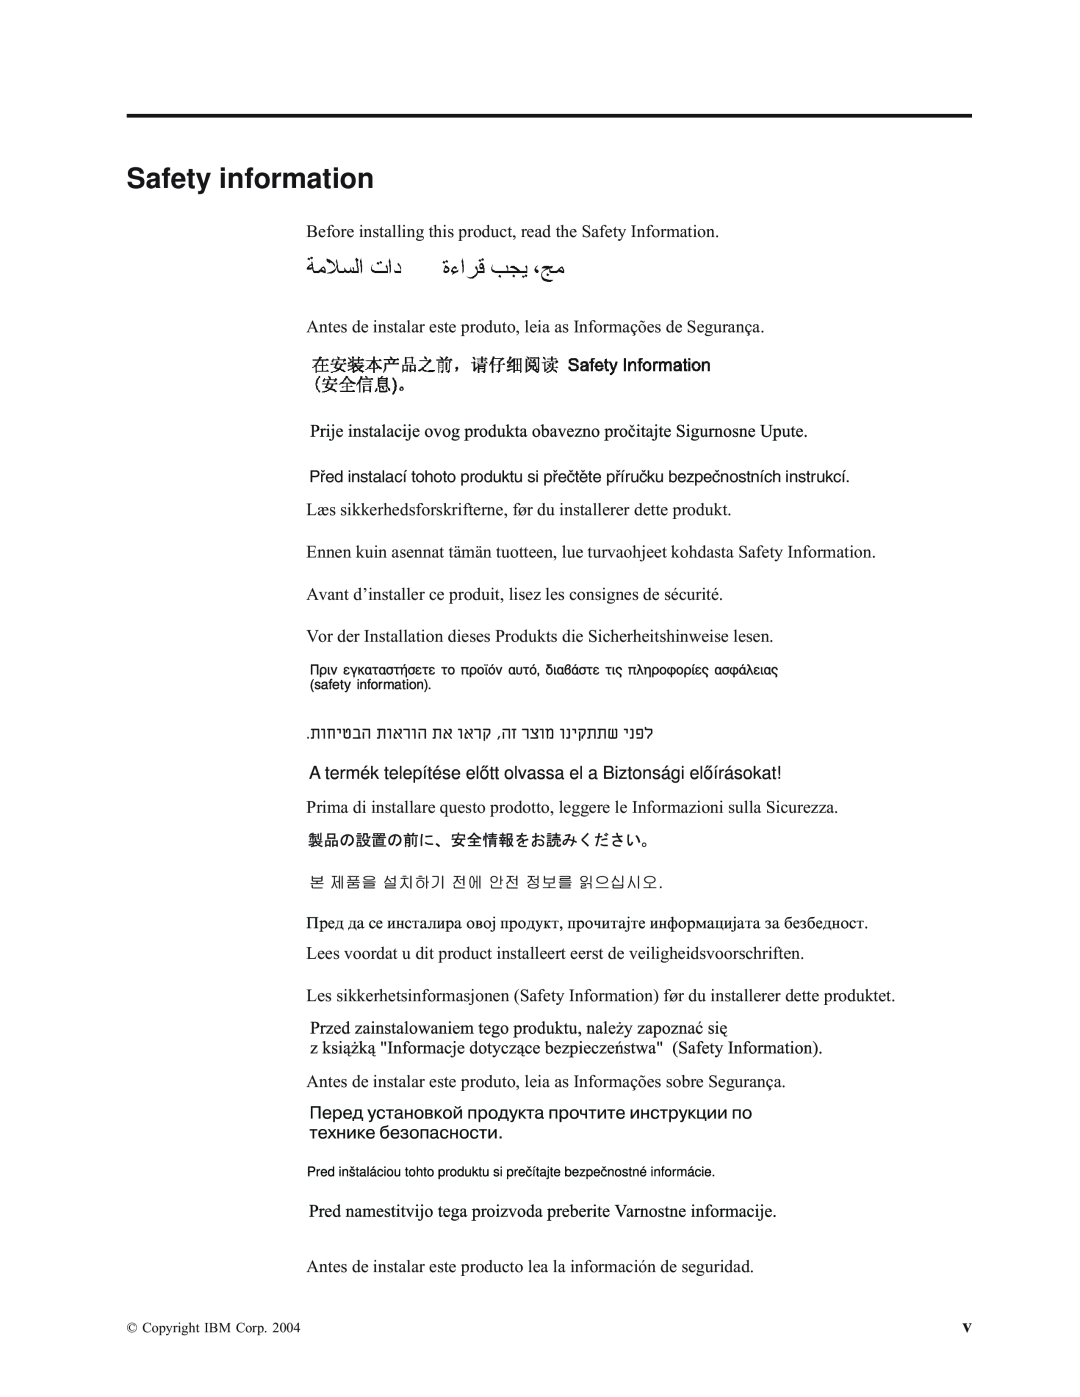 IBM E400 manual Safety information 